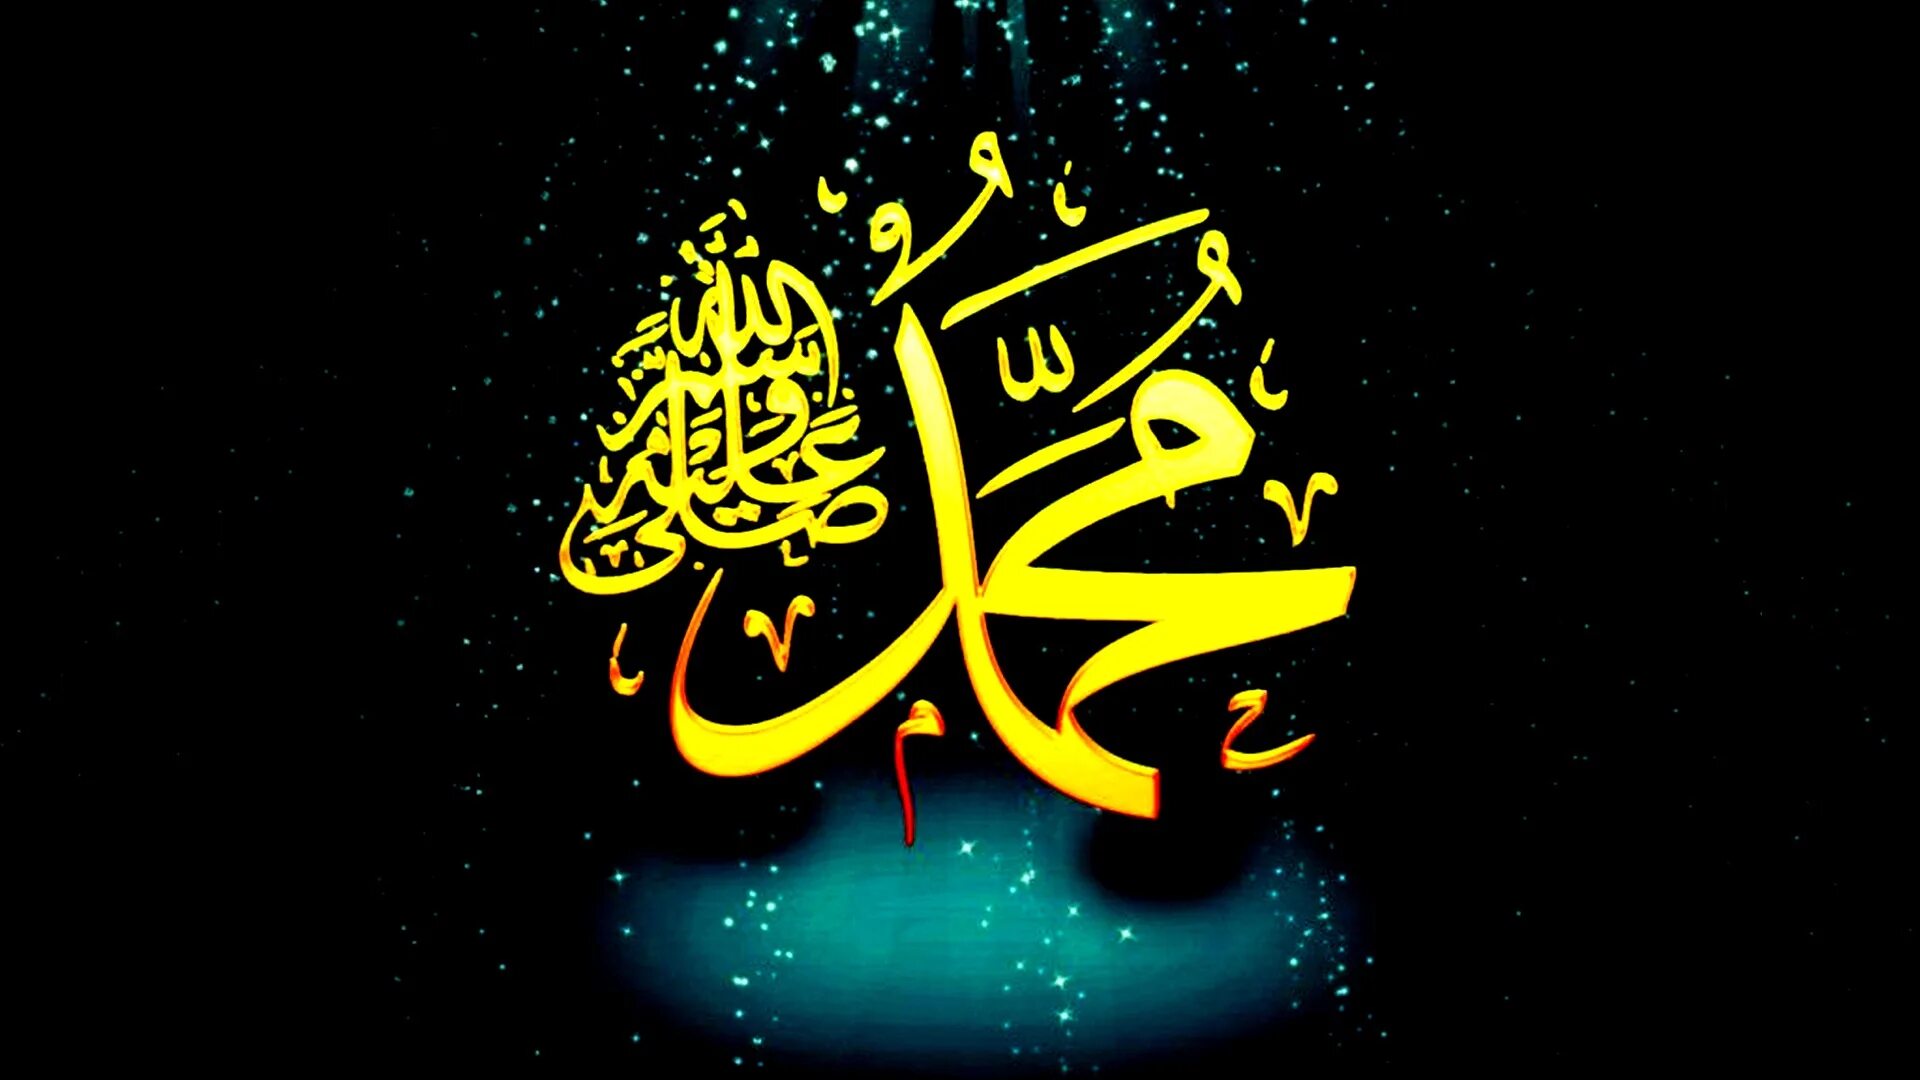 Ххж. Пророк Мухаммад Посланник Аллаха. Имя пророка Мухаммеда. Мухаммад на арабском. Мухаммад надпись.